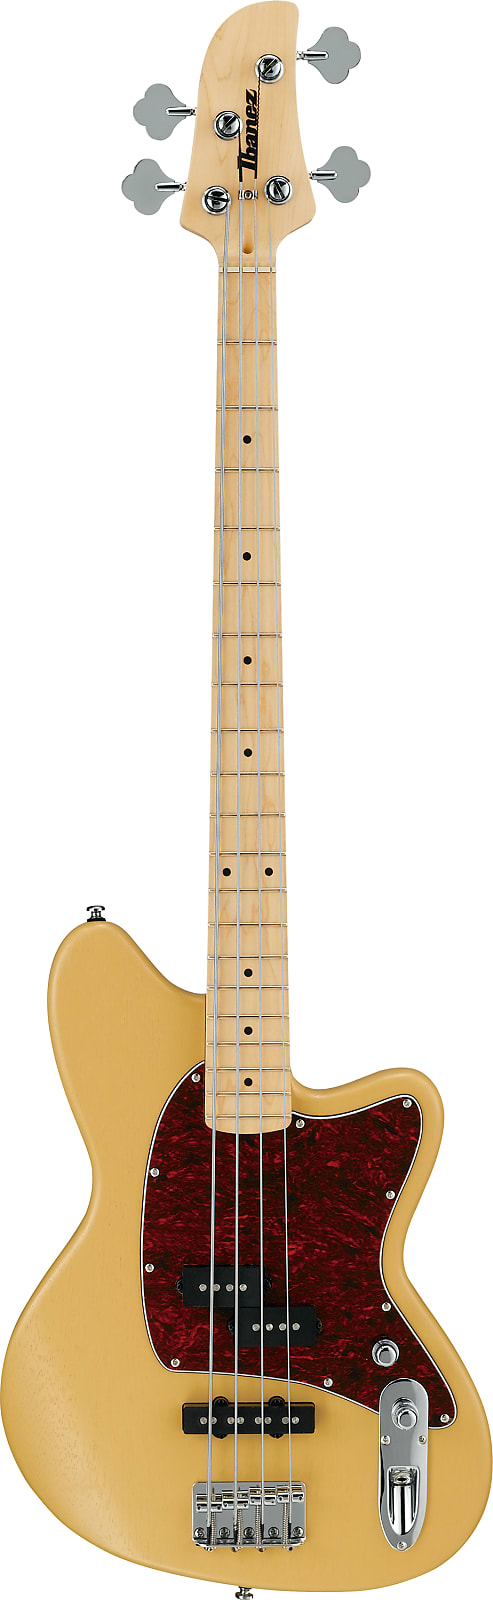 Ibanez TMB100M Talman Standard Electric Bass Guitar Mustard Yellow Flat